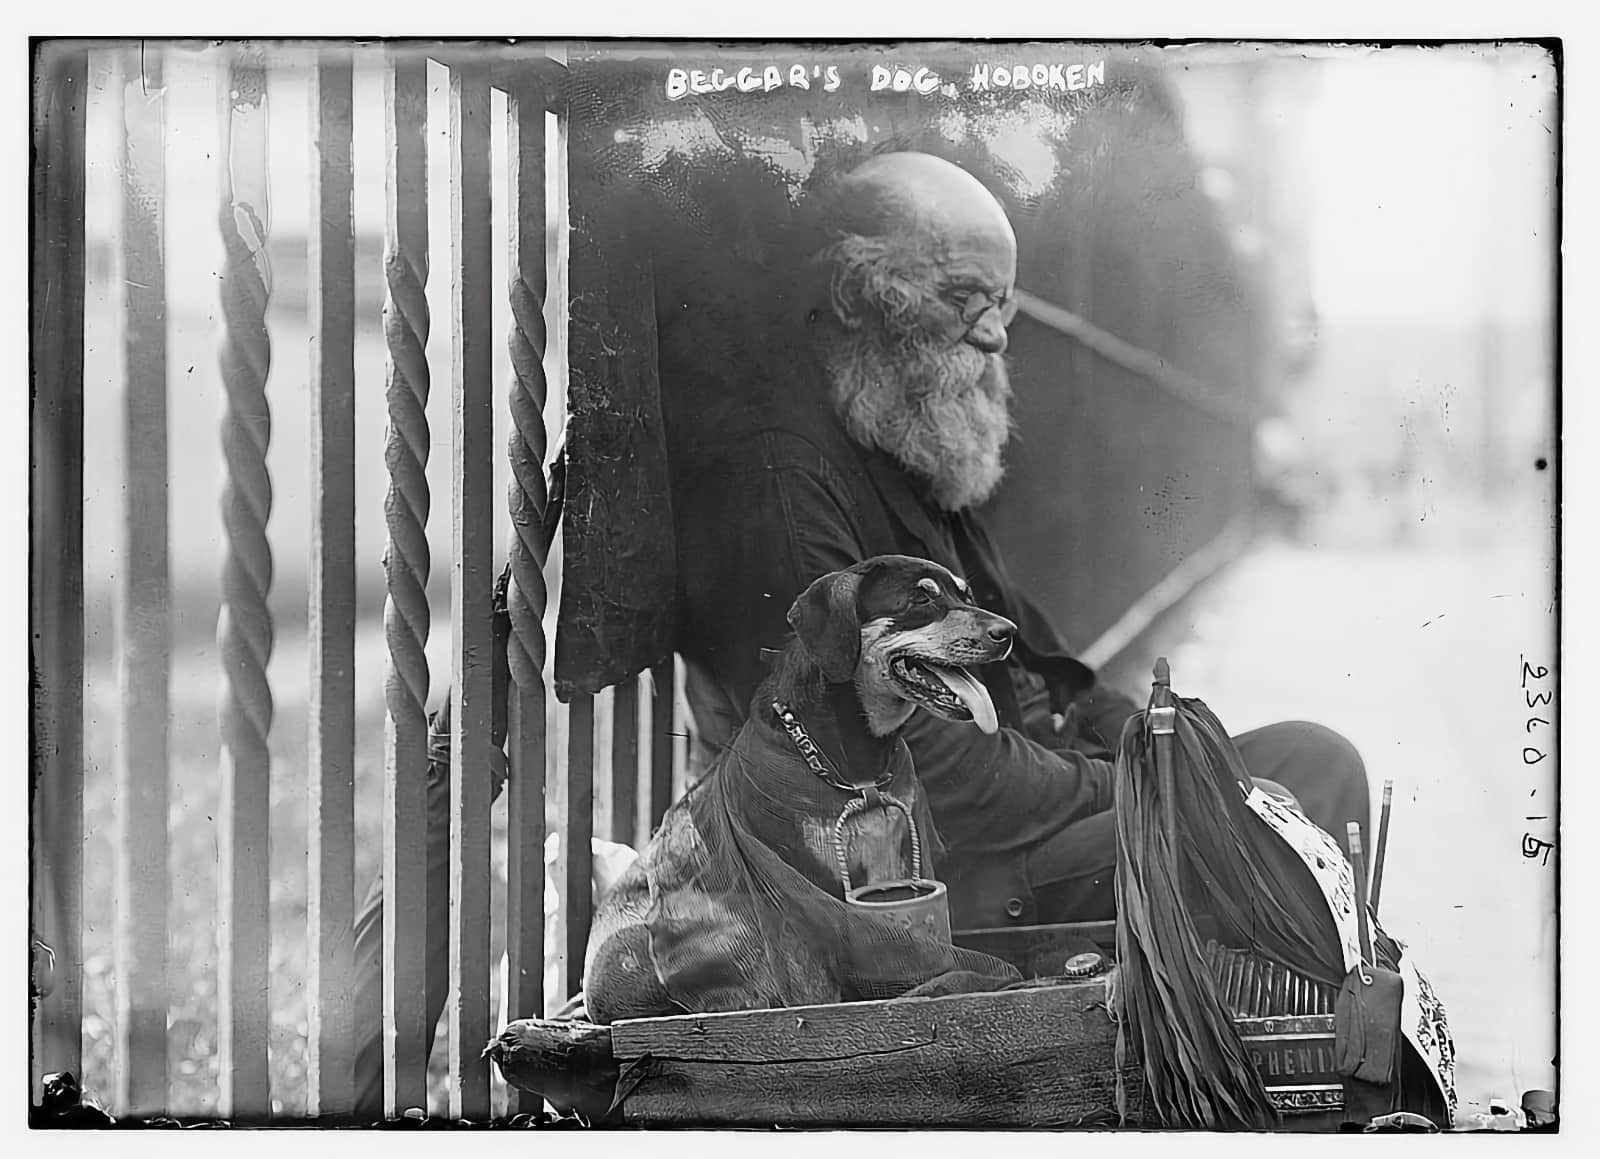 Beggar's dog - Hoboken (LOC) https://flickr.com/photos/library_of_congress/2163816260/